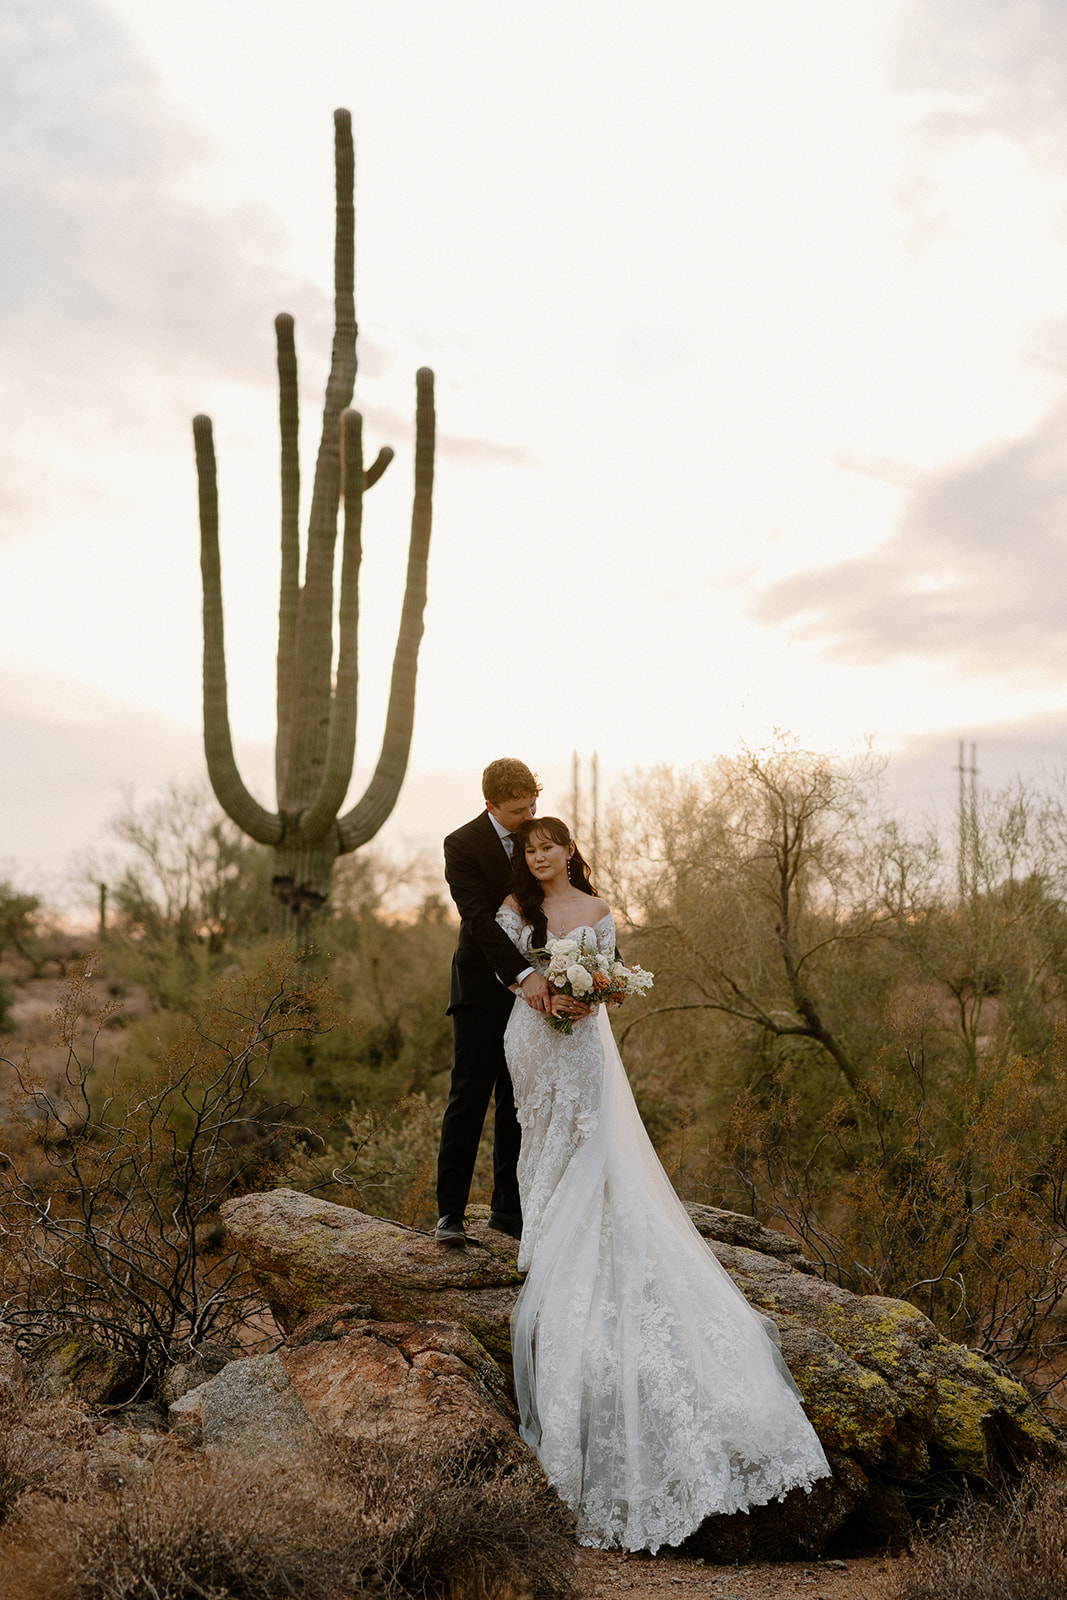 stunning bride and groom poses in the Arizona desert